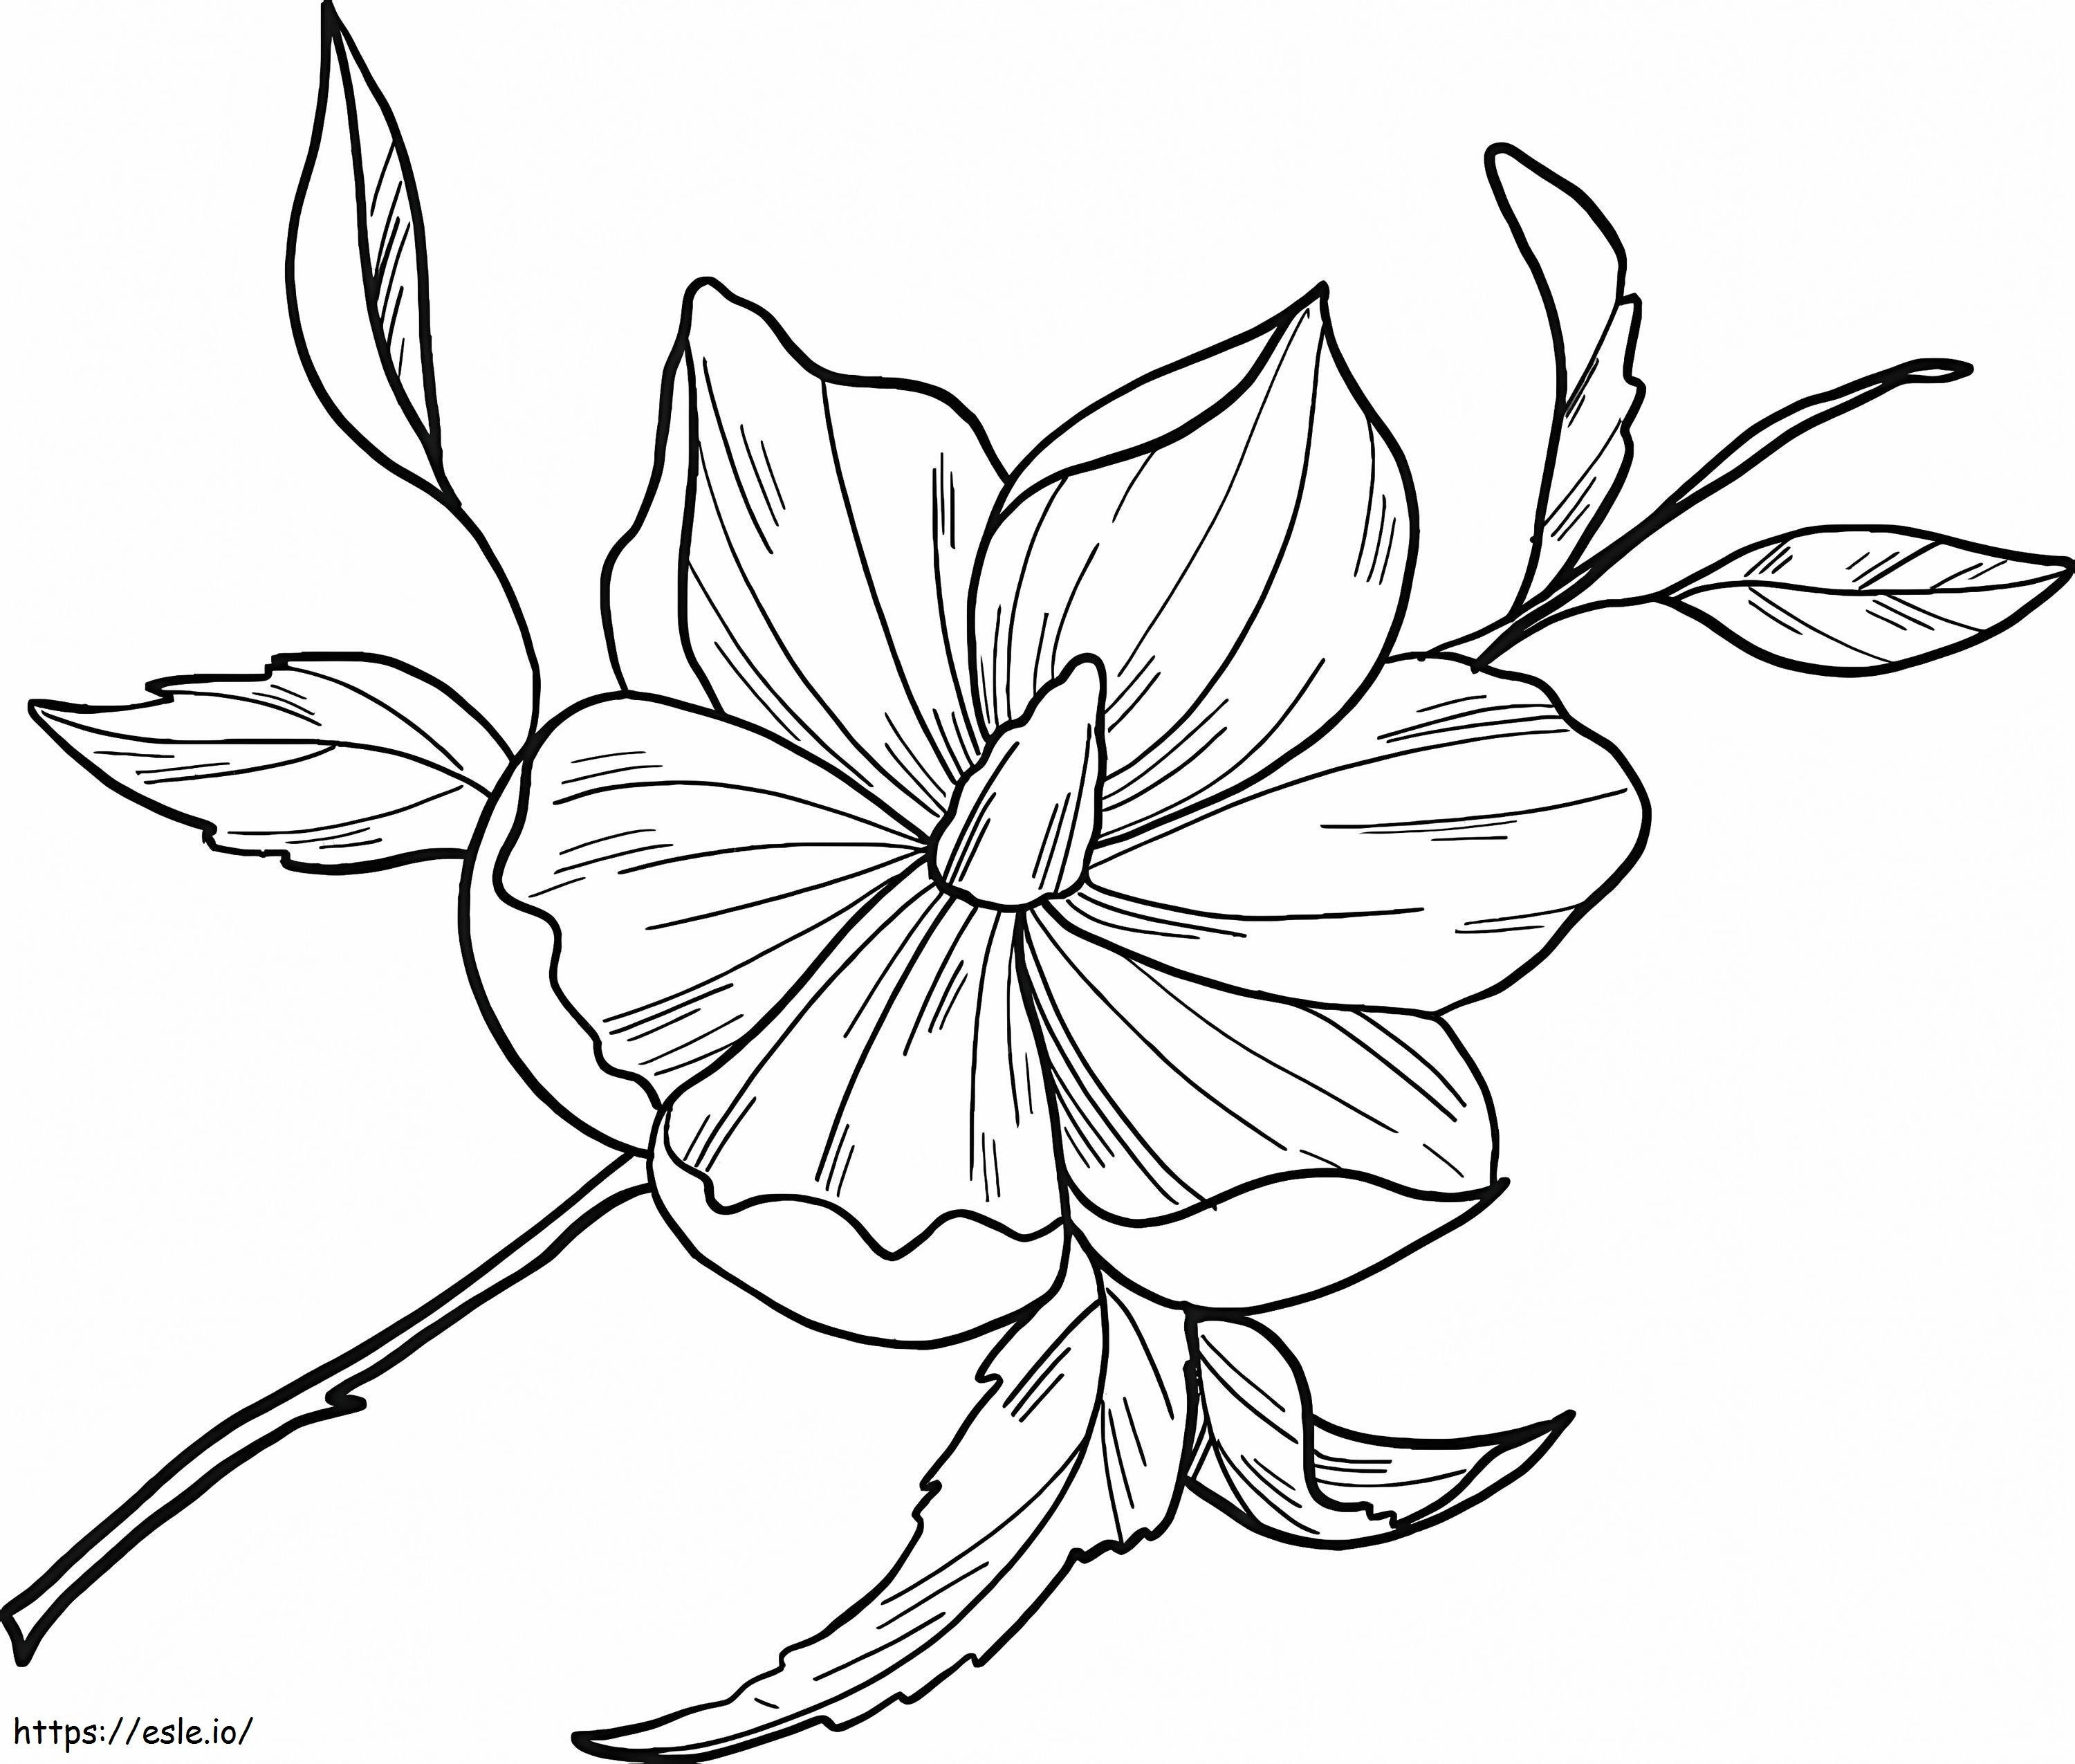 Magnolienblüte 11 ausmalbilder